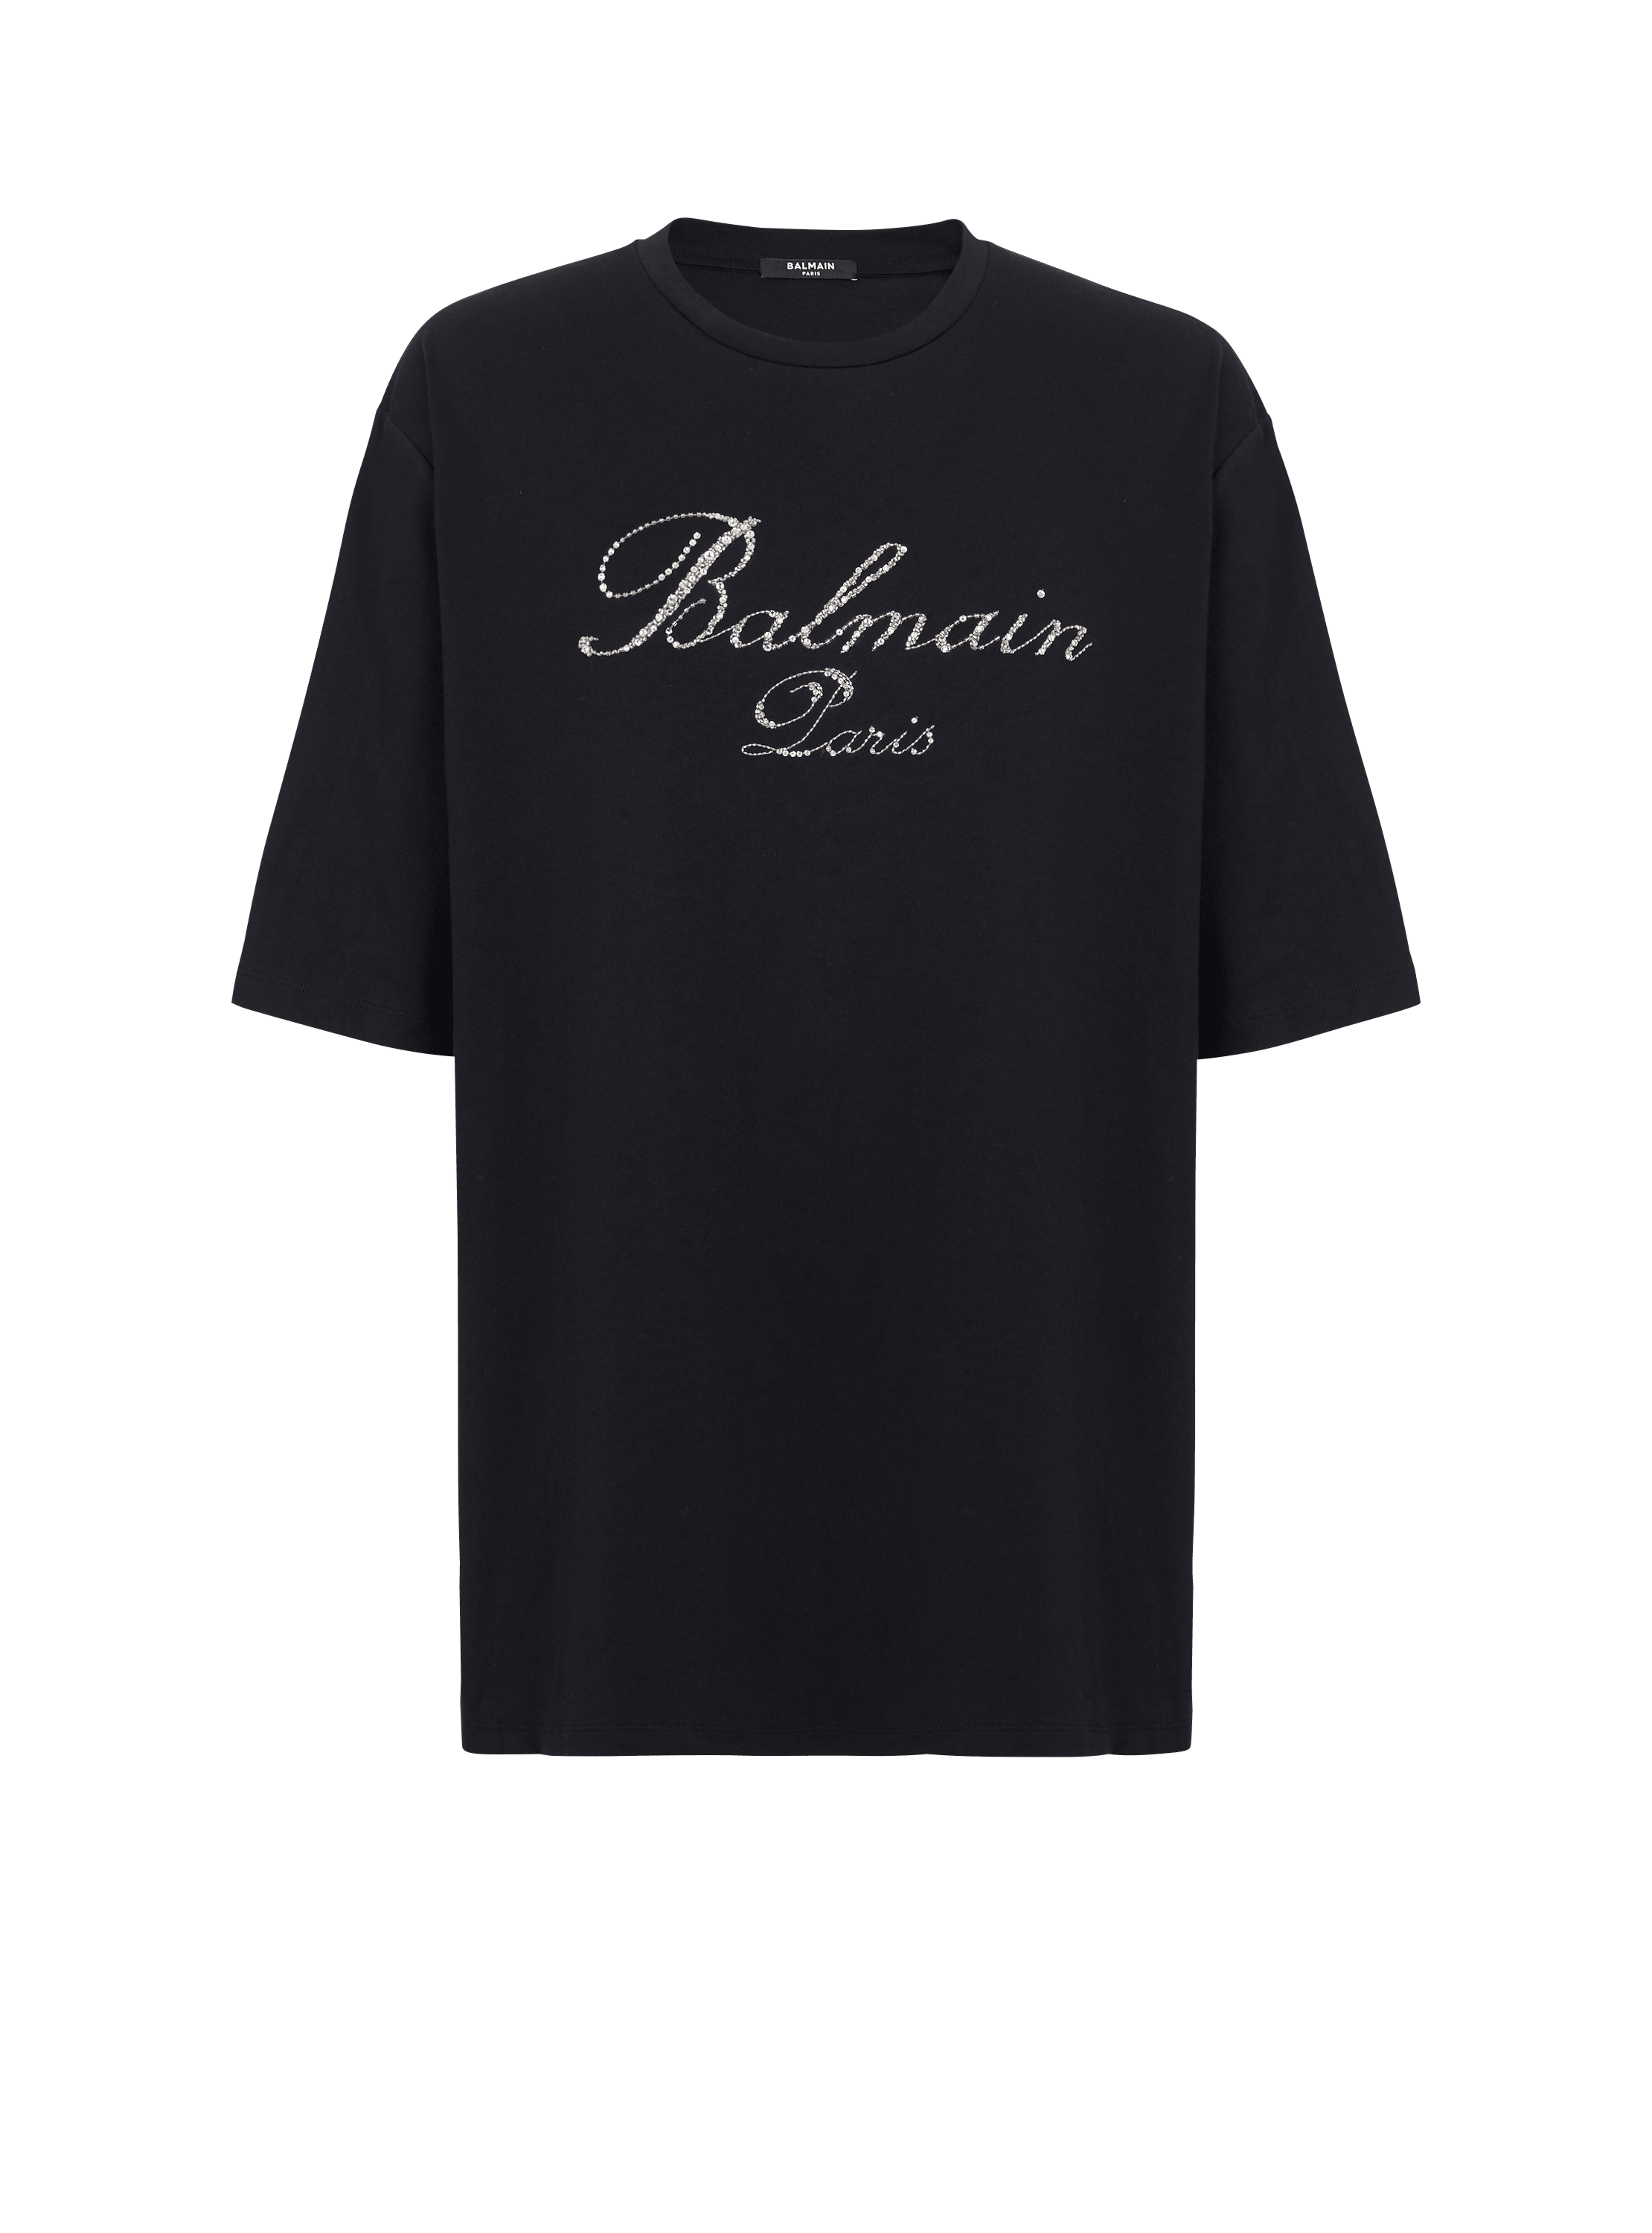 Balmain Signature embroidered T-shirt